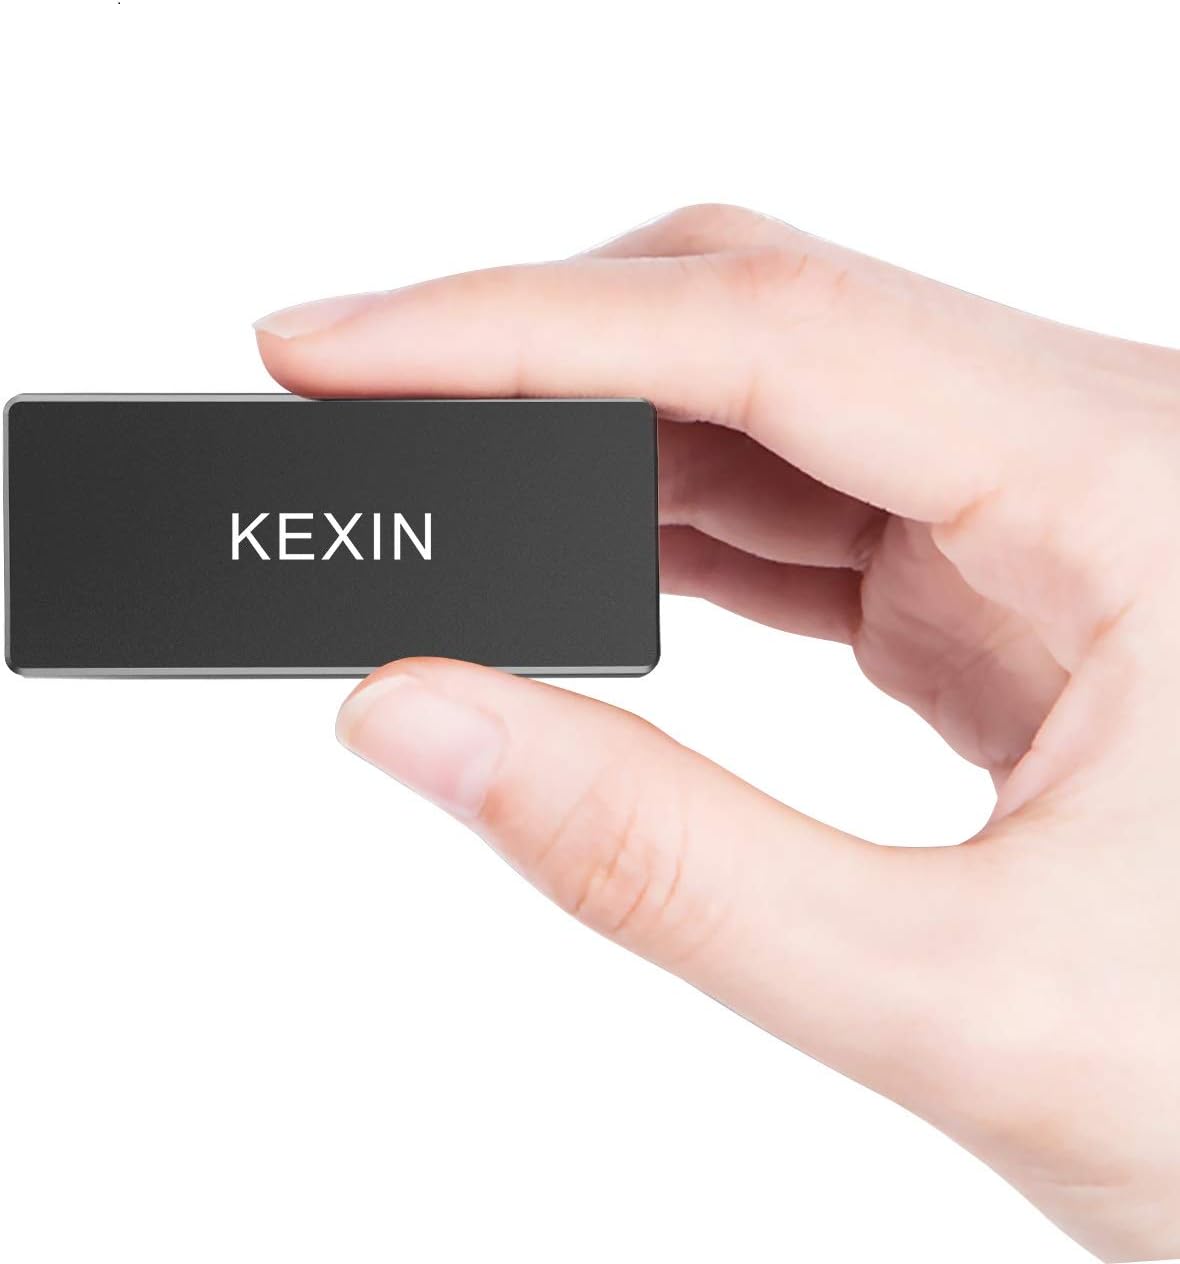 KEXIN ポータブルSSD 250GB USB3.1 Gen2 外付SSD ミニSSD Type-Cに対応 PS4 Windows MAC Android Linuxに適用 超小型高速伝送 耐衝撃 黒